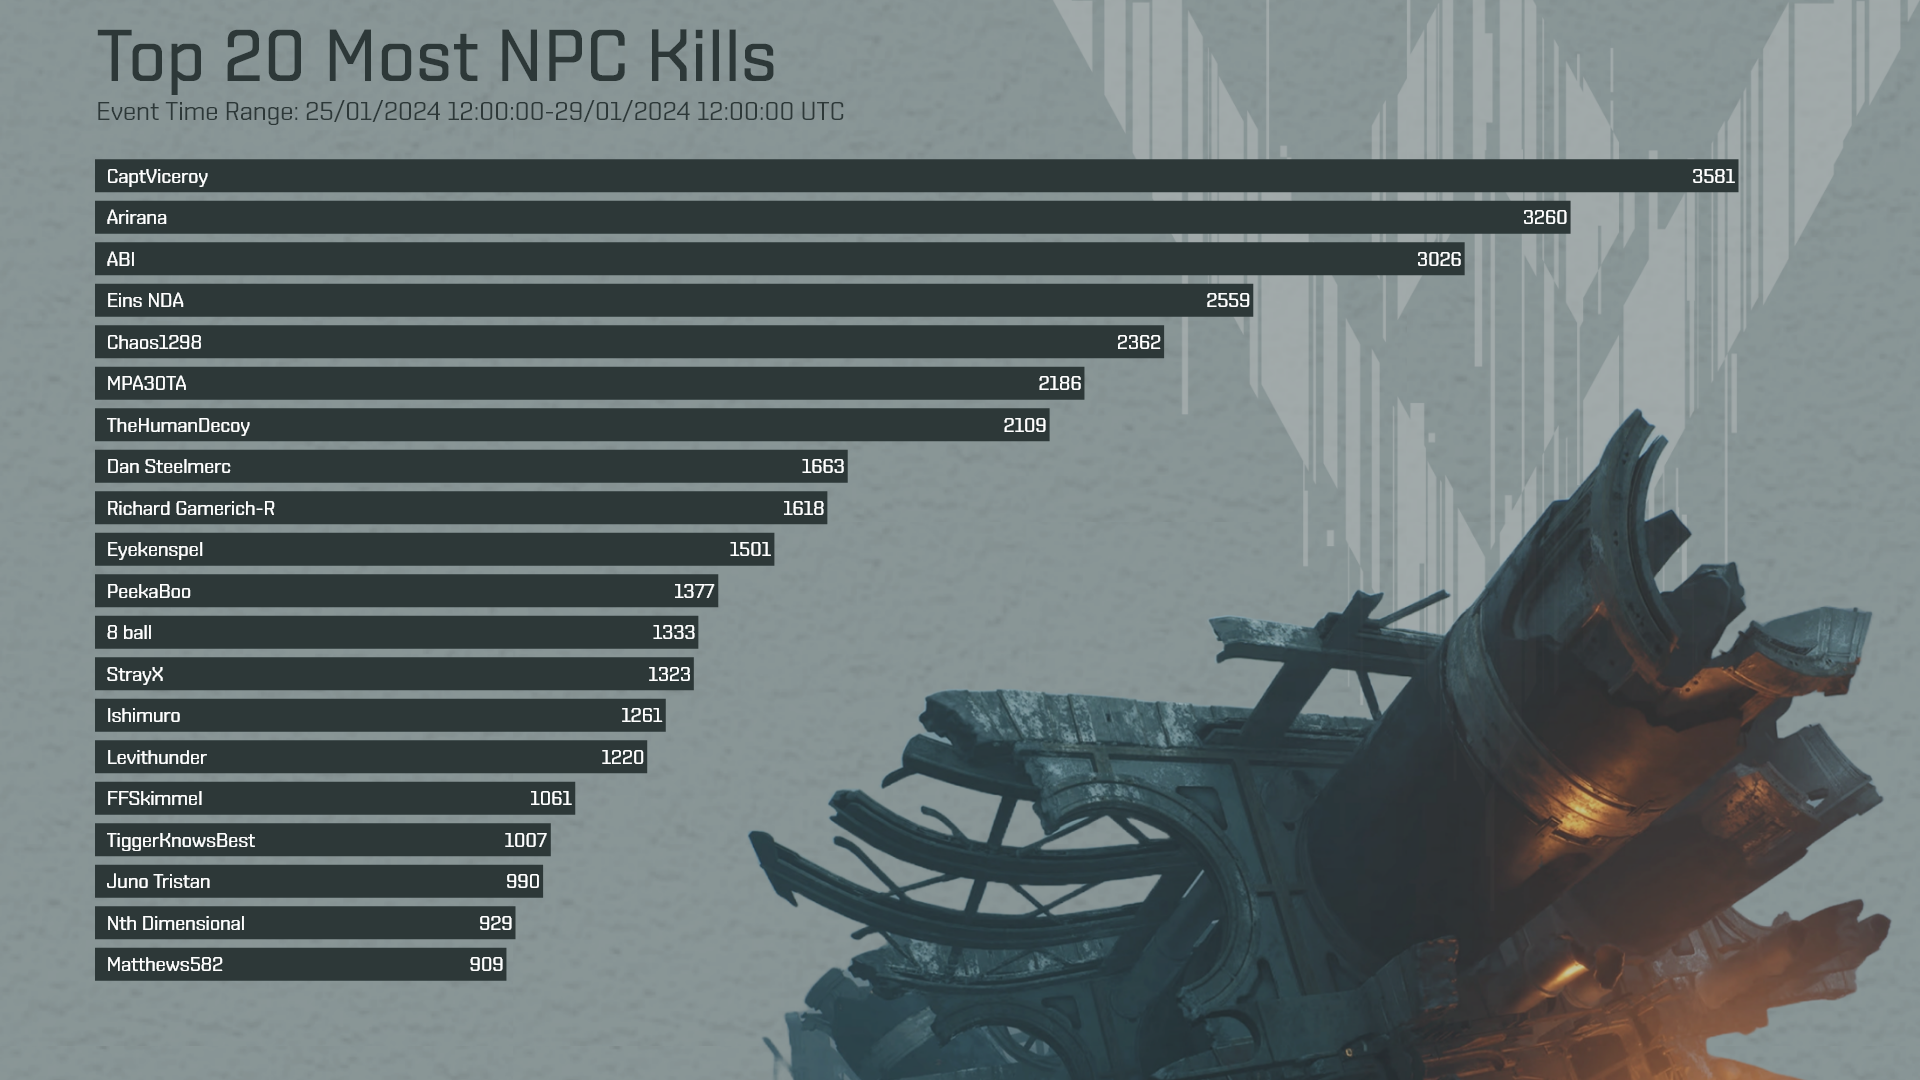 Vanguard leaderboard NPC kills